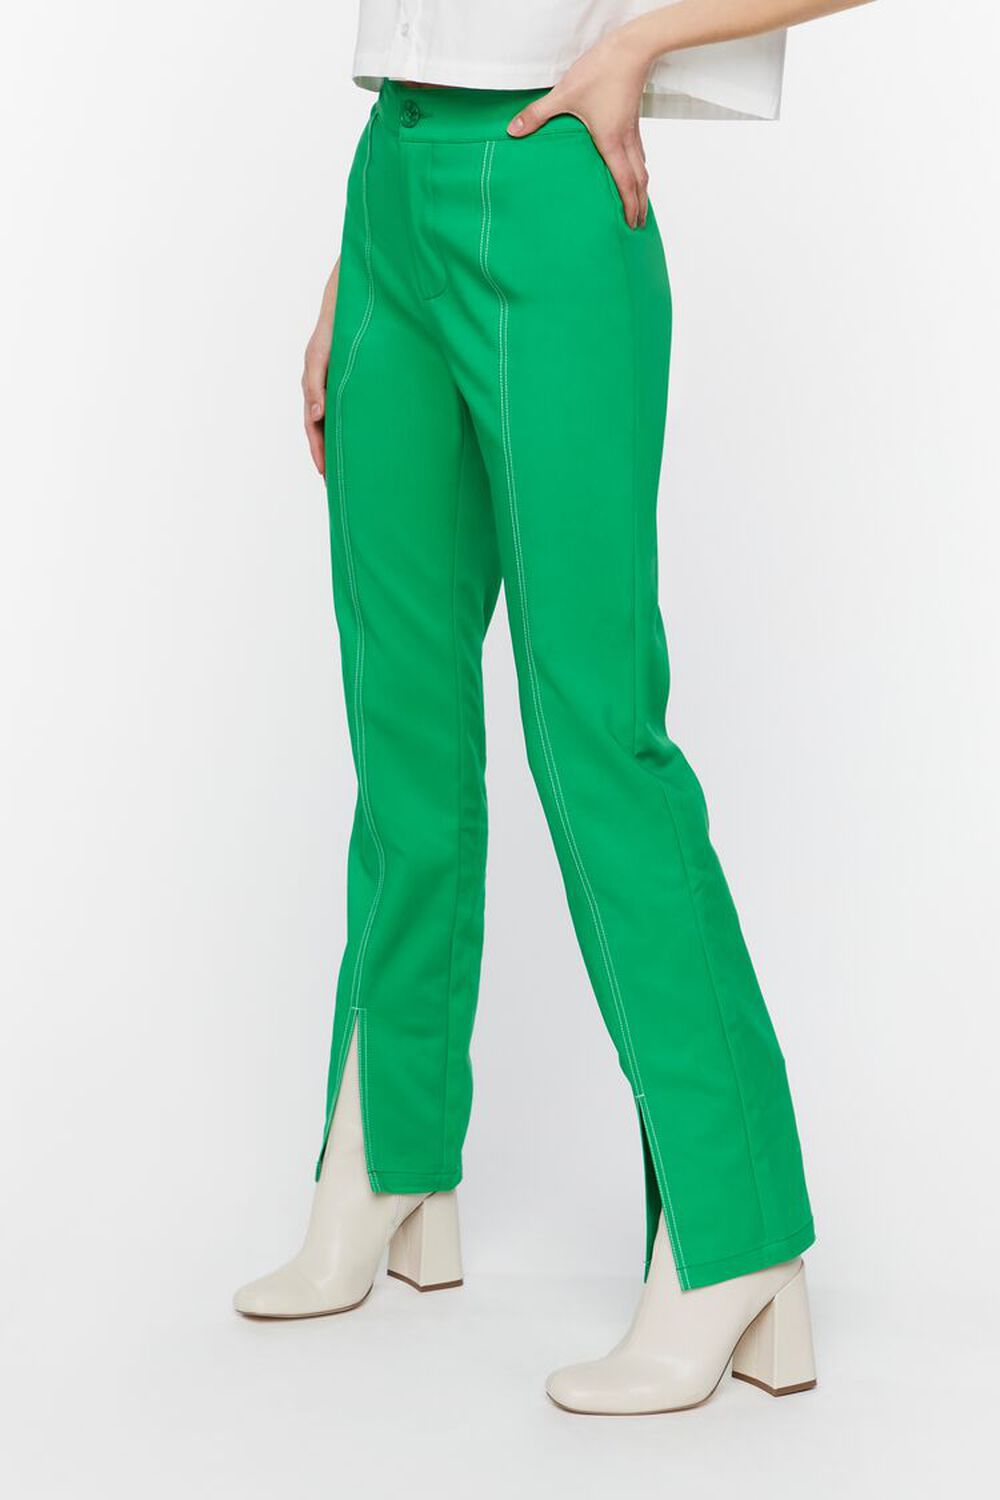 GREEN/WHITE Contrast-Trim Split-Hem Pants, image 3